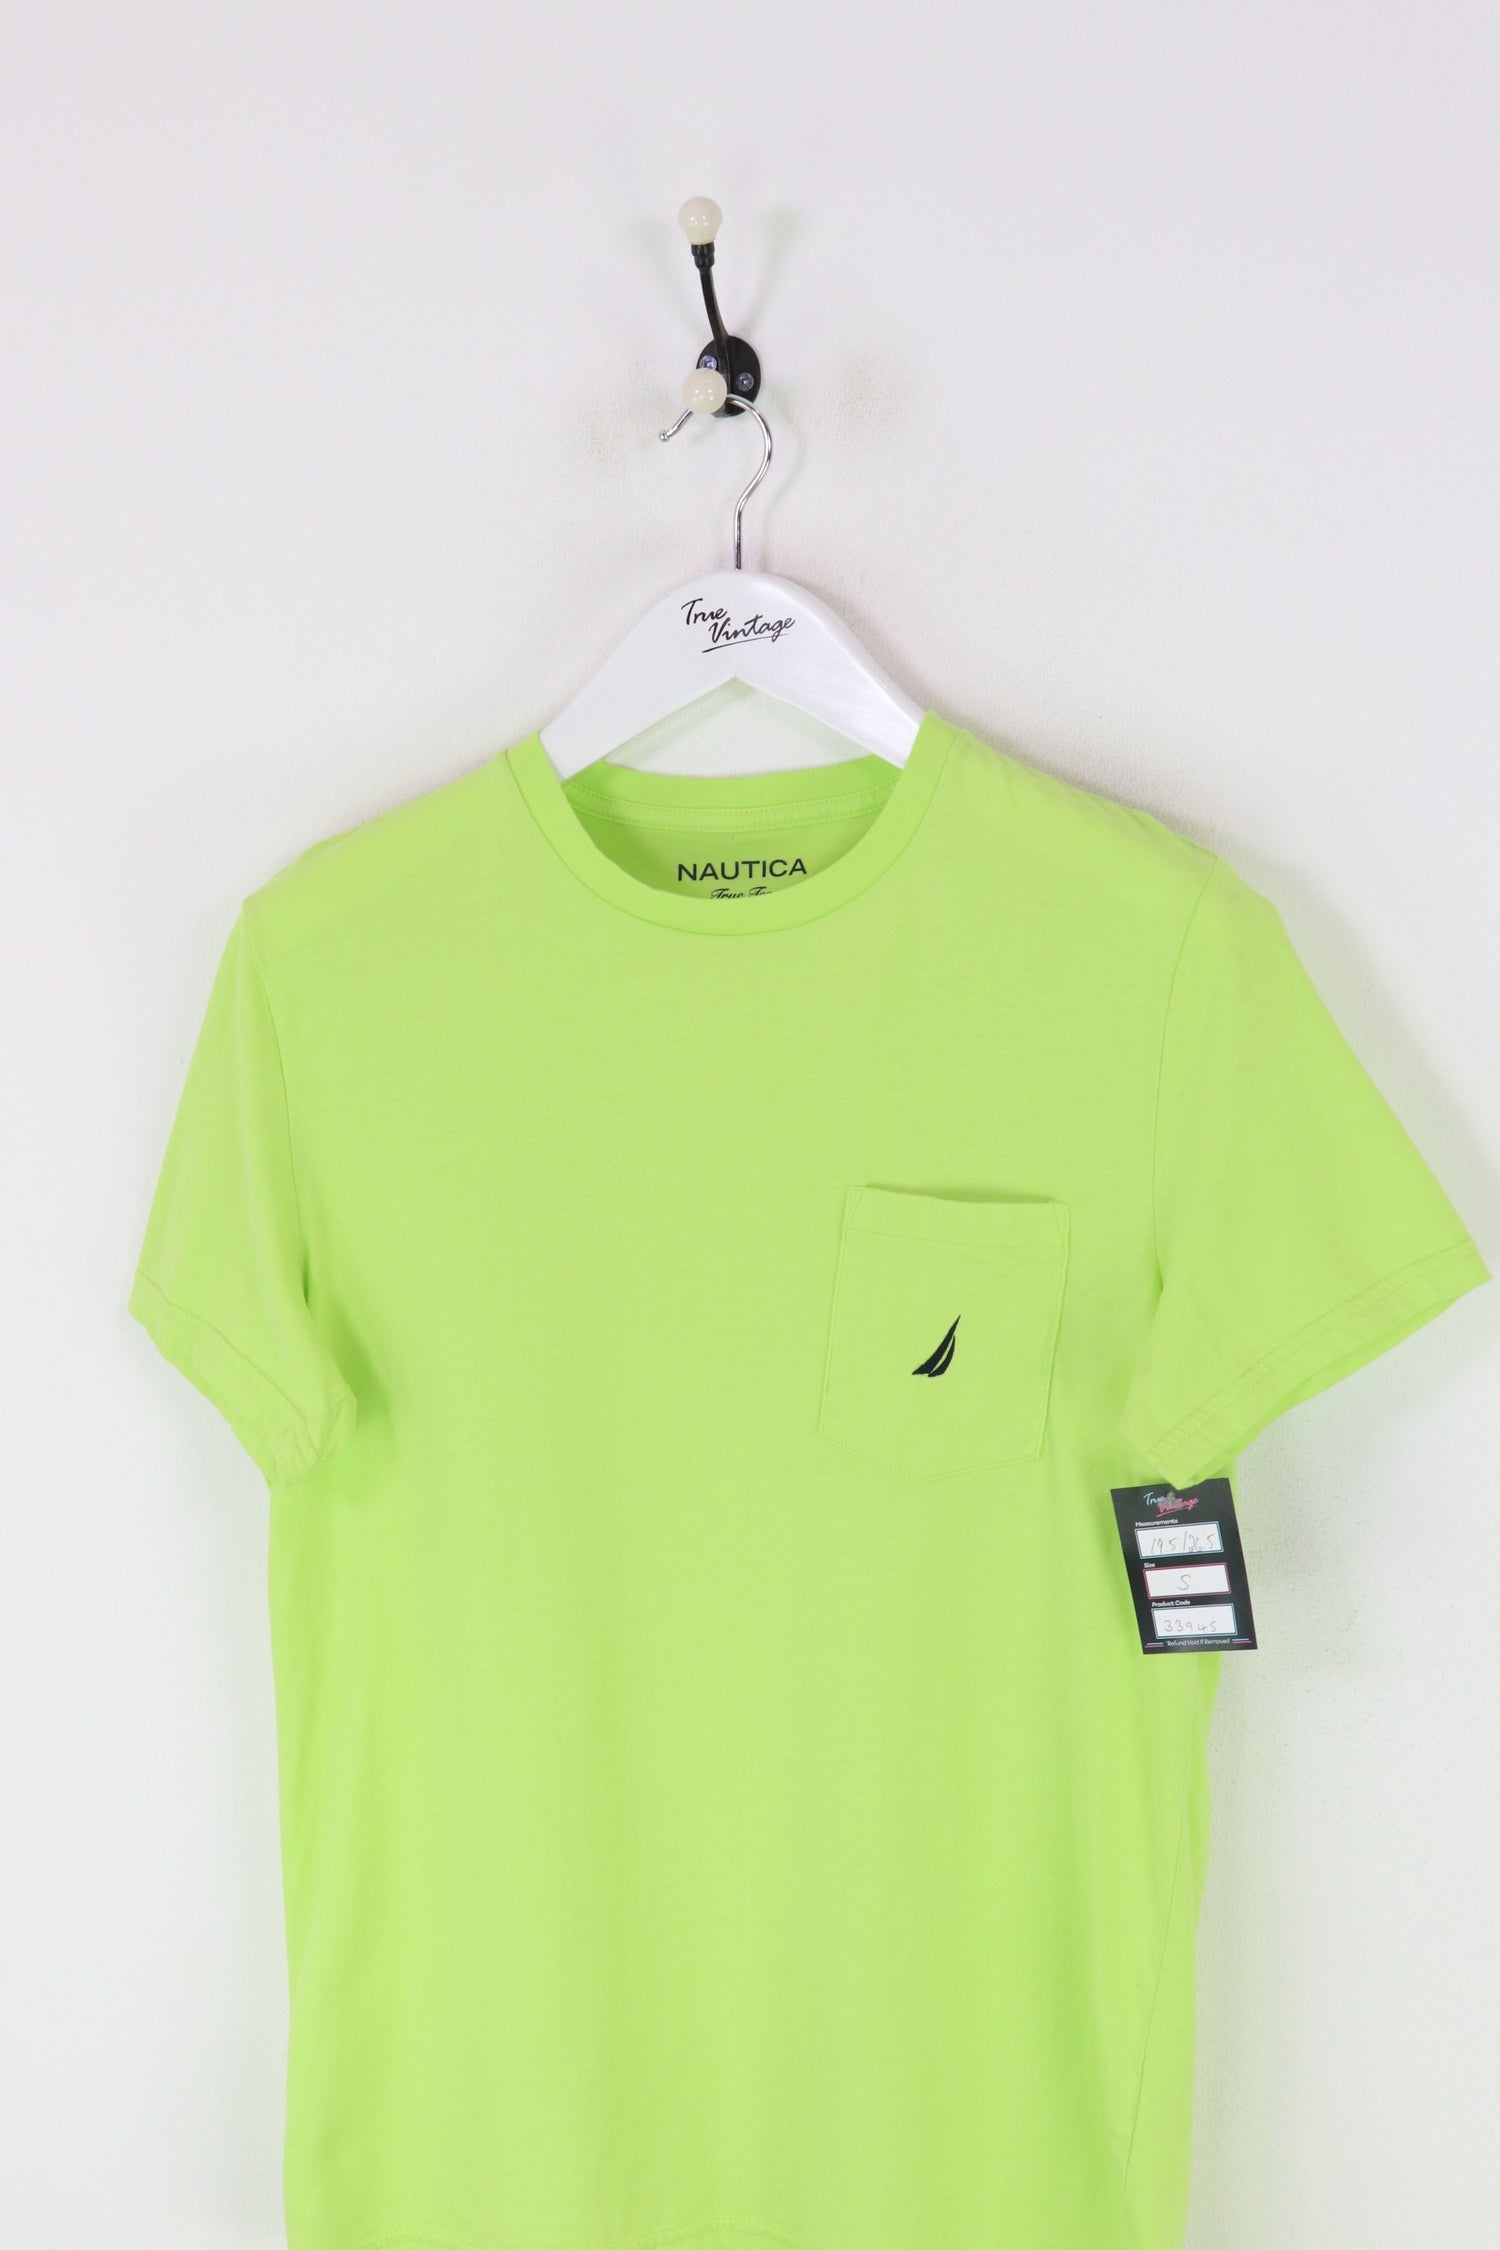 Nautica T-shirt Green Small